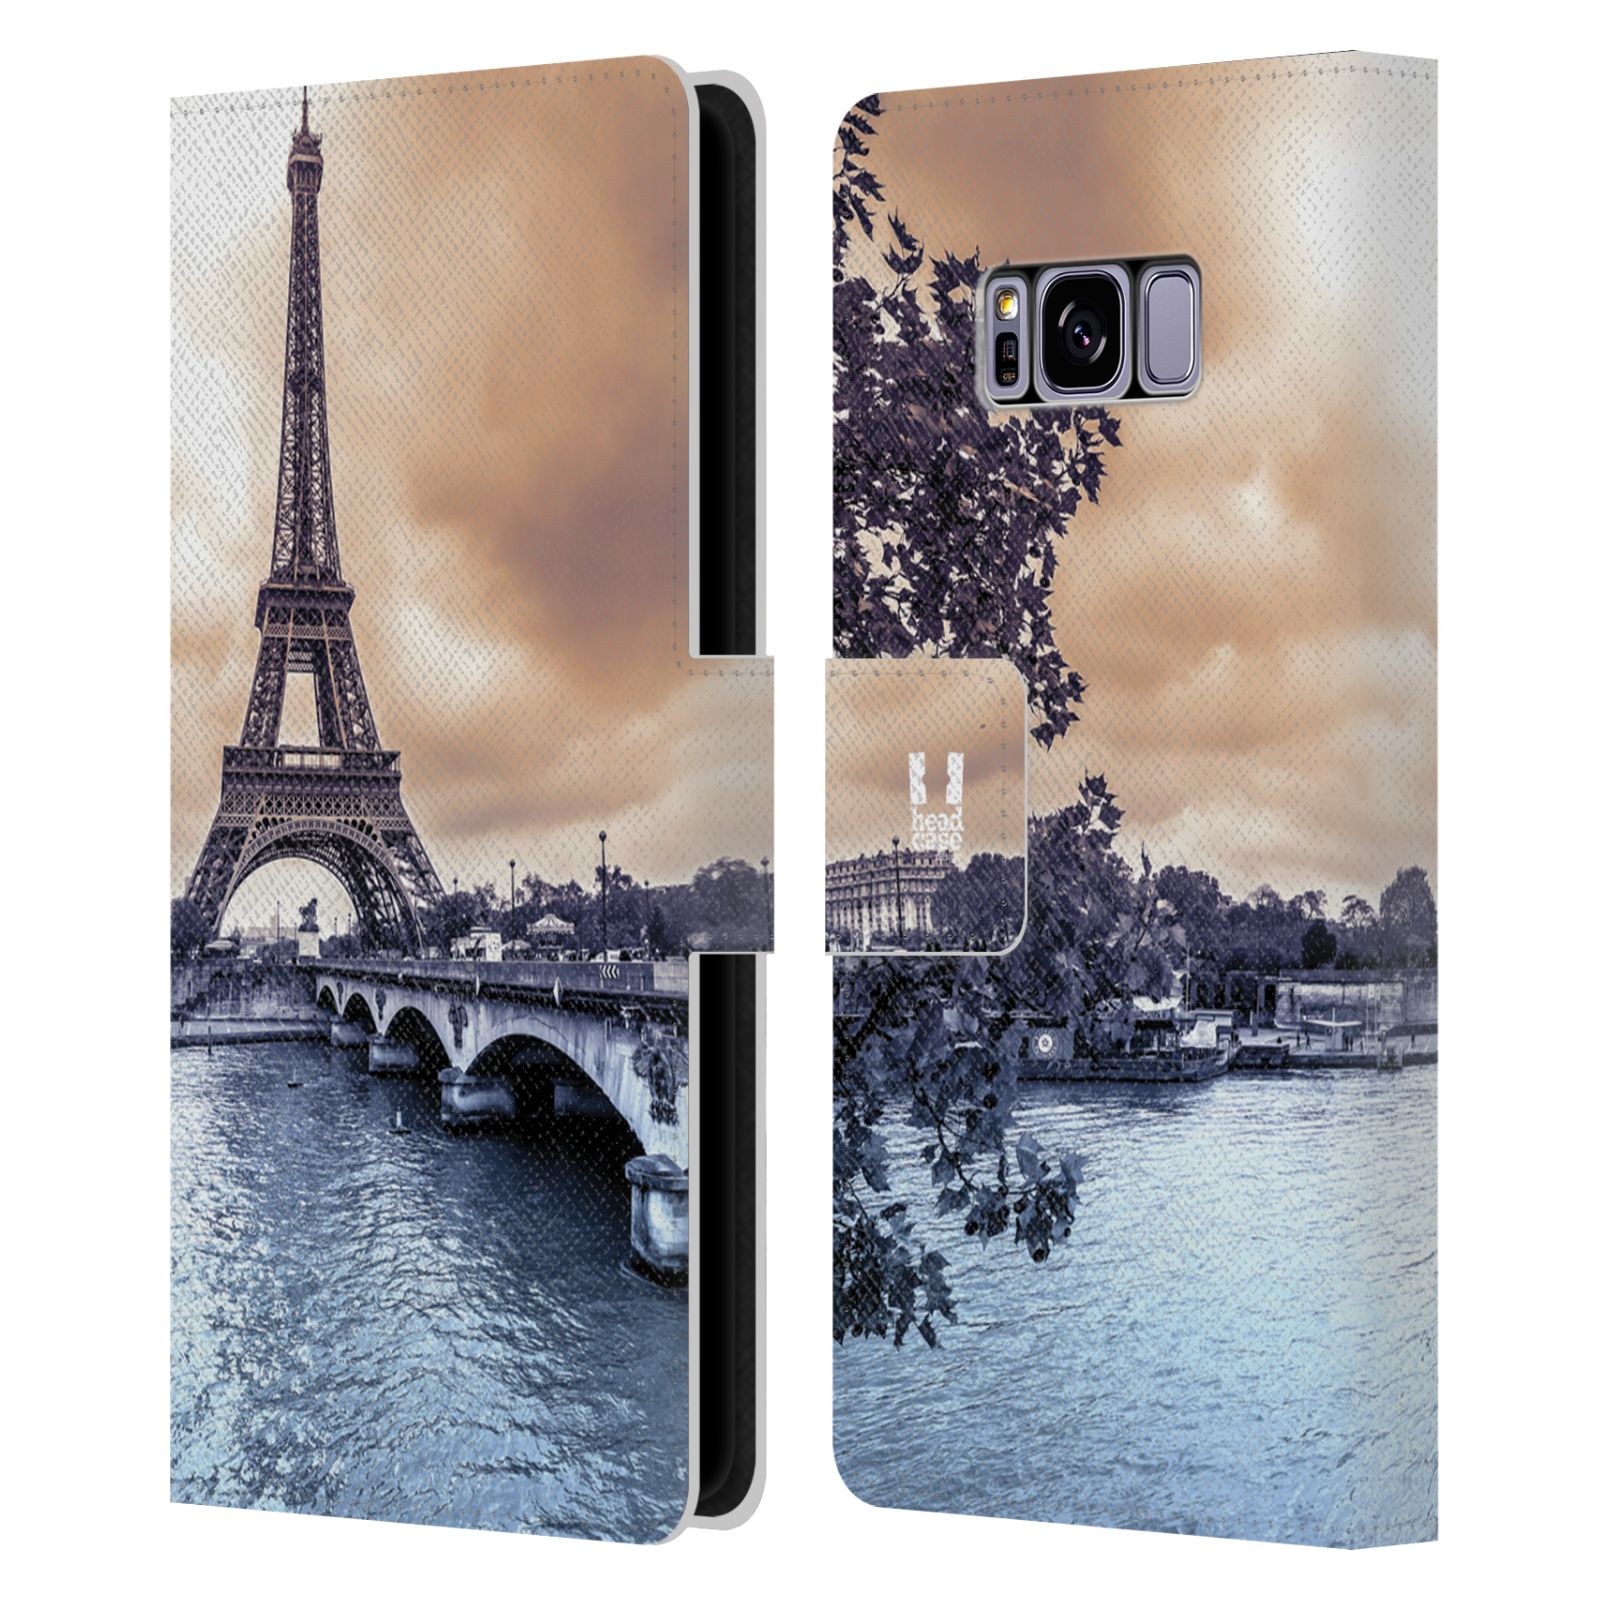 Pouzdro pro mobil Samsung Galaxy S8 - Eiffelova věž Paříž - Francie